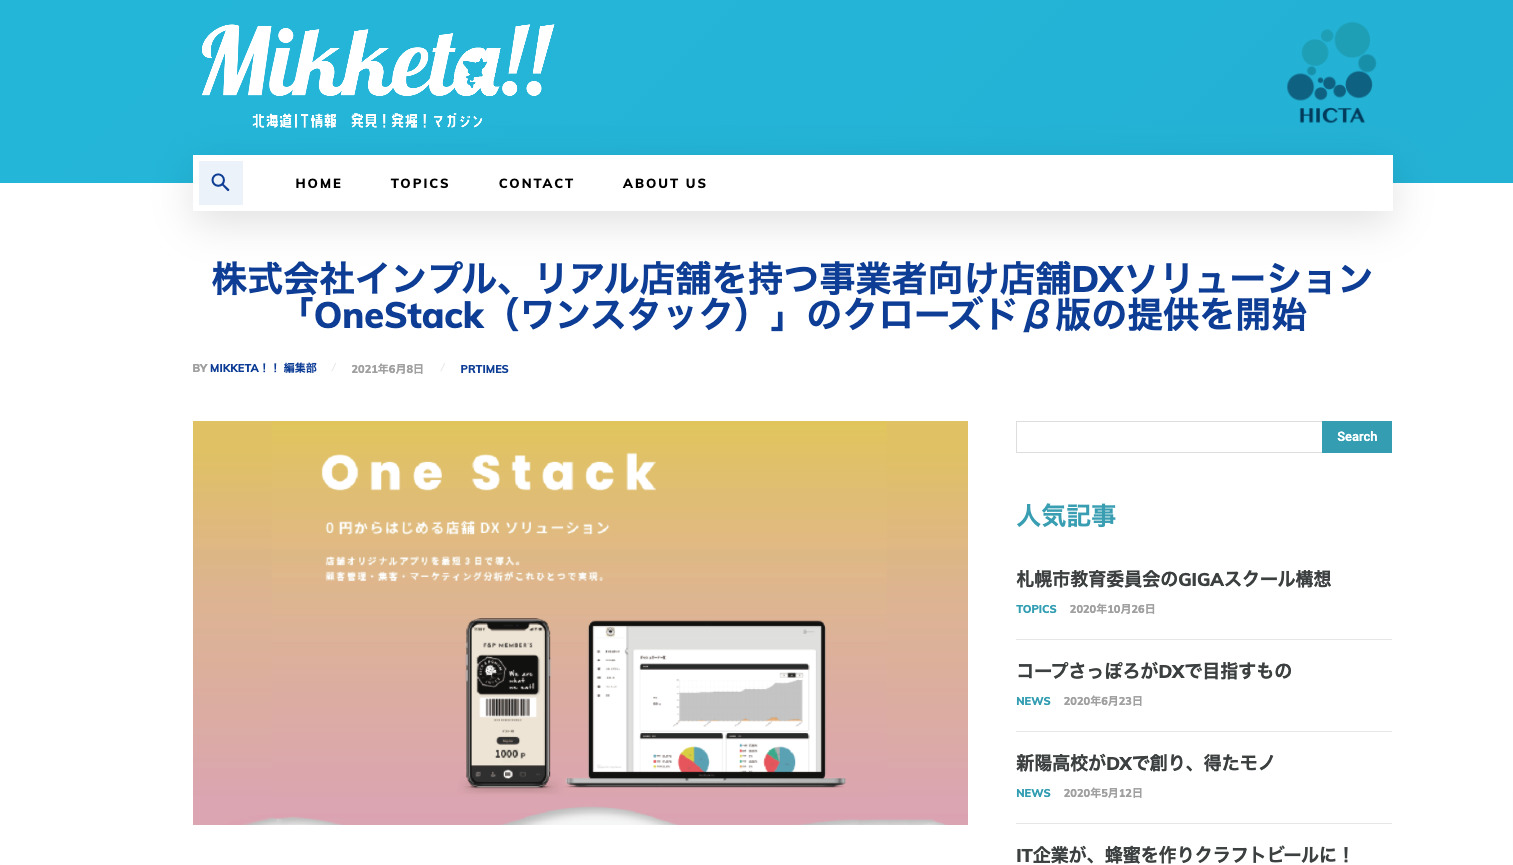 「OneStack」が Mikketa!! に掲載されました